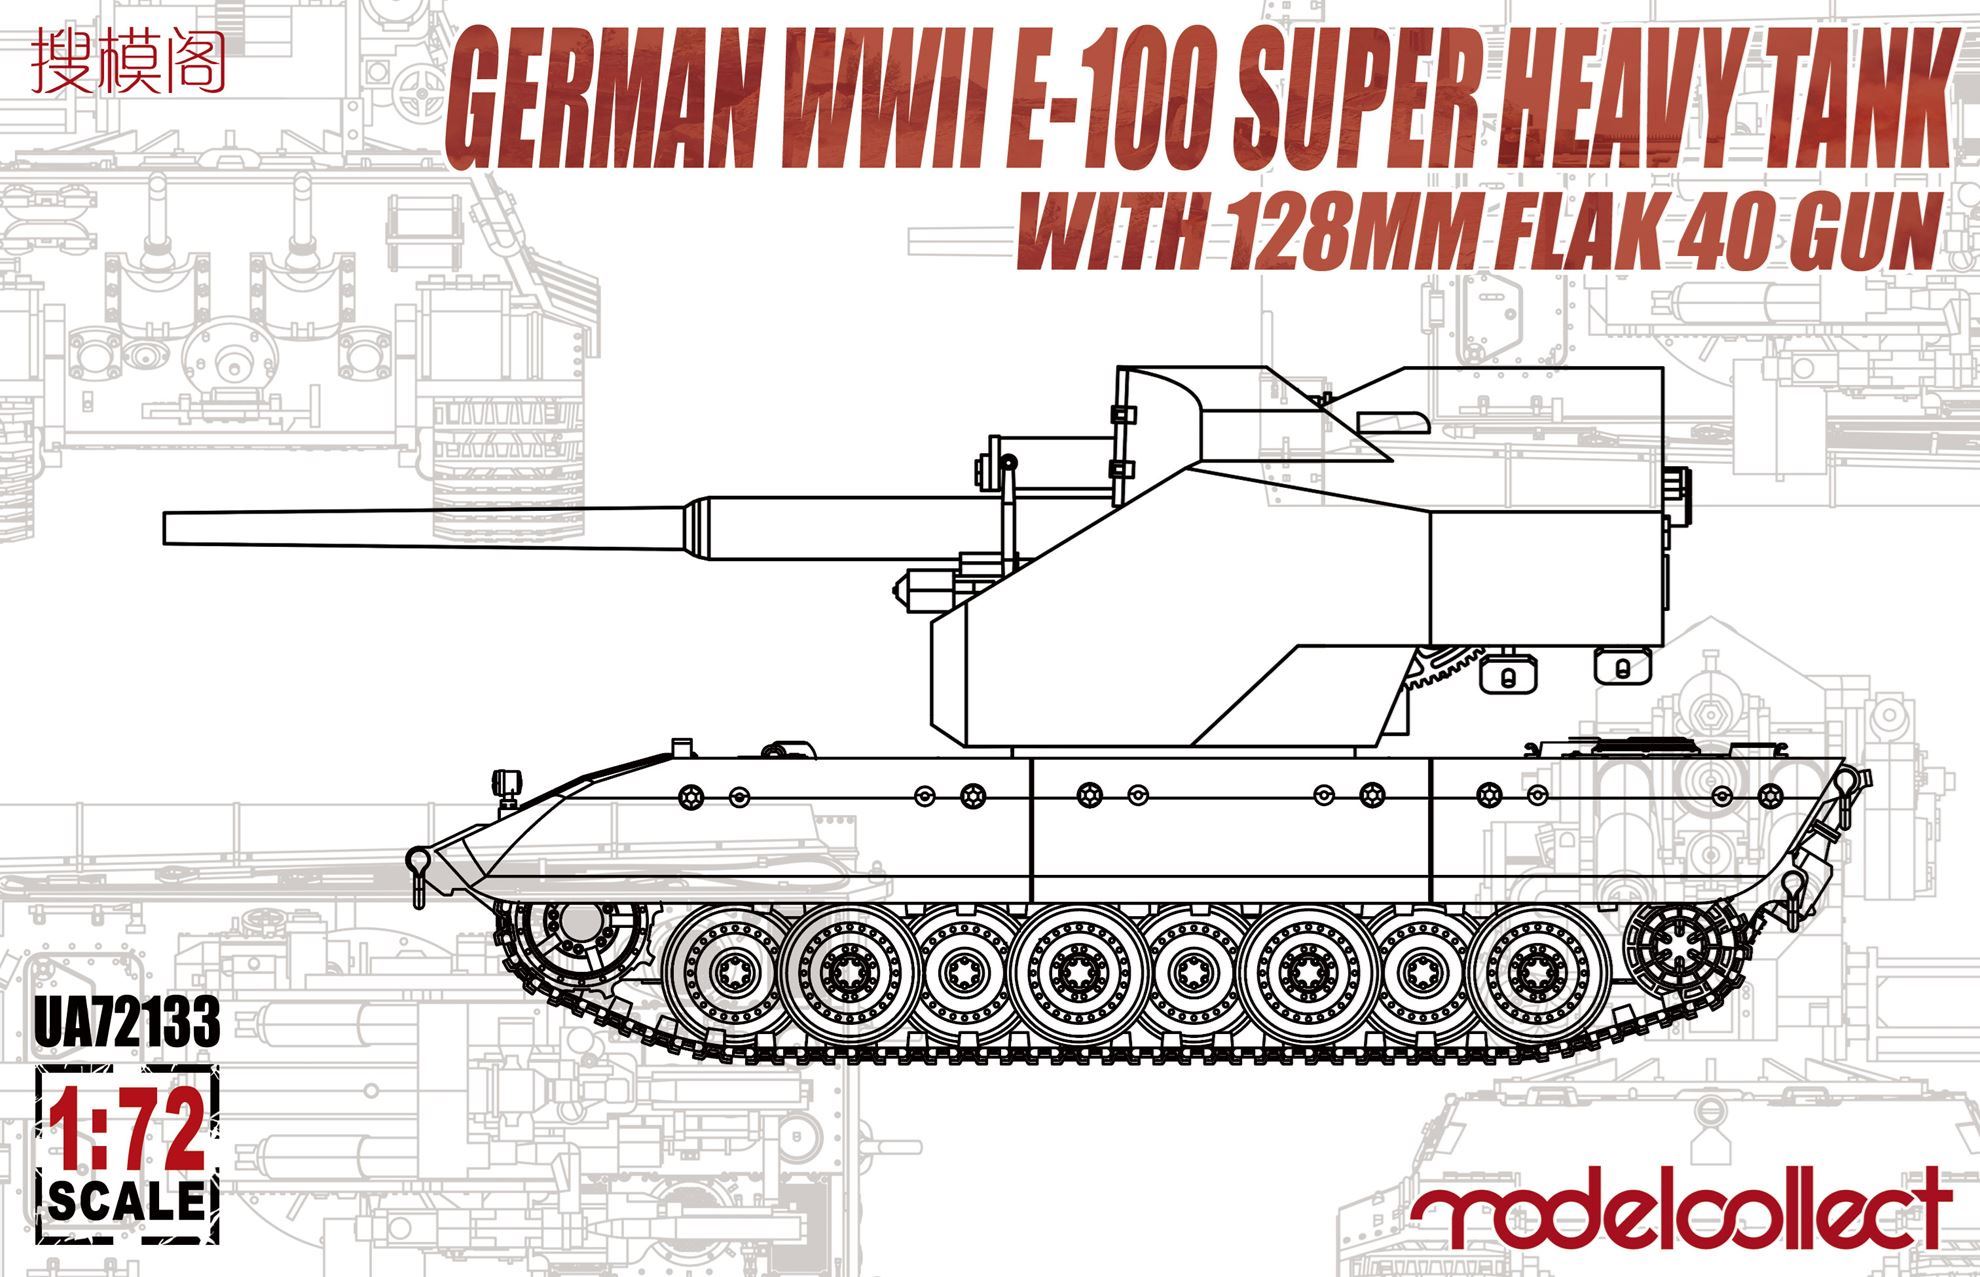 German E-100 Super Heavy Tank with 128mm Flak 40 gun